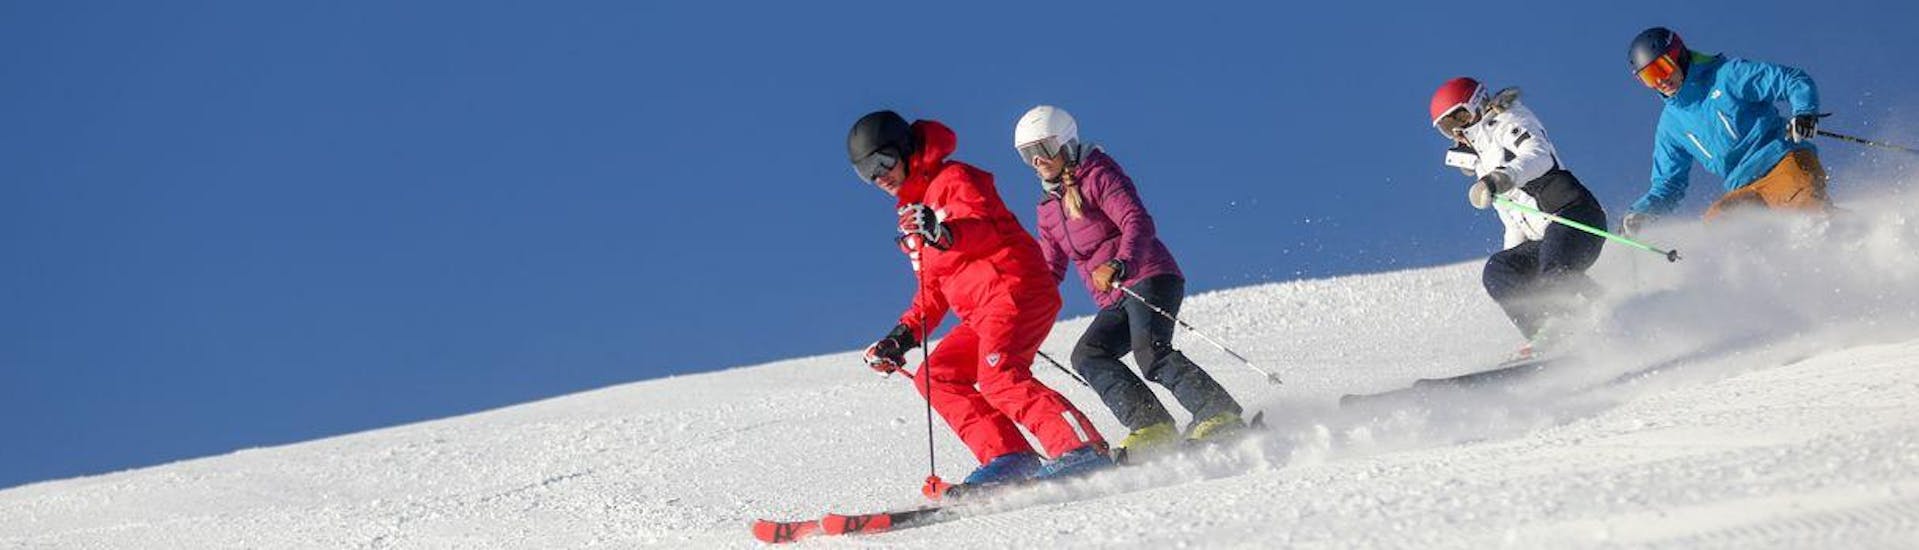 Lezioni di sci per adulti.